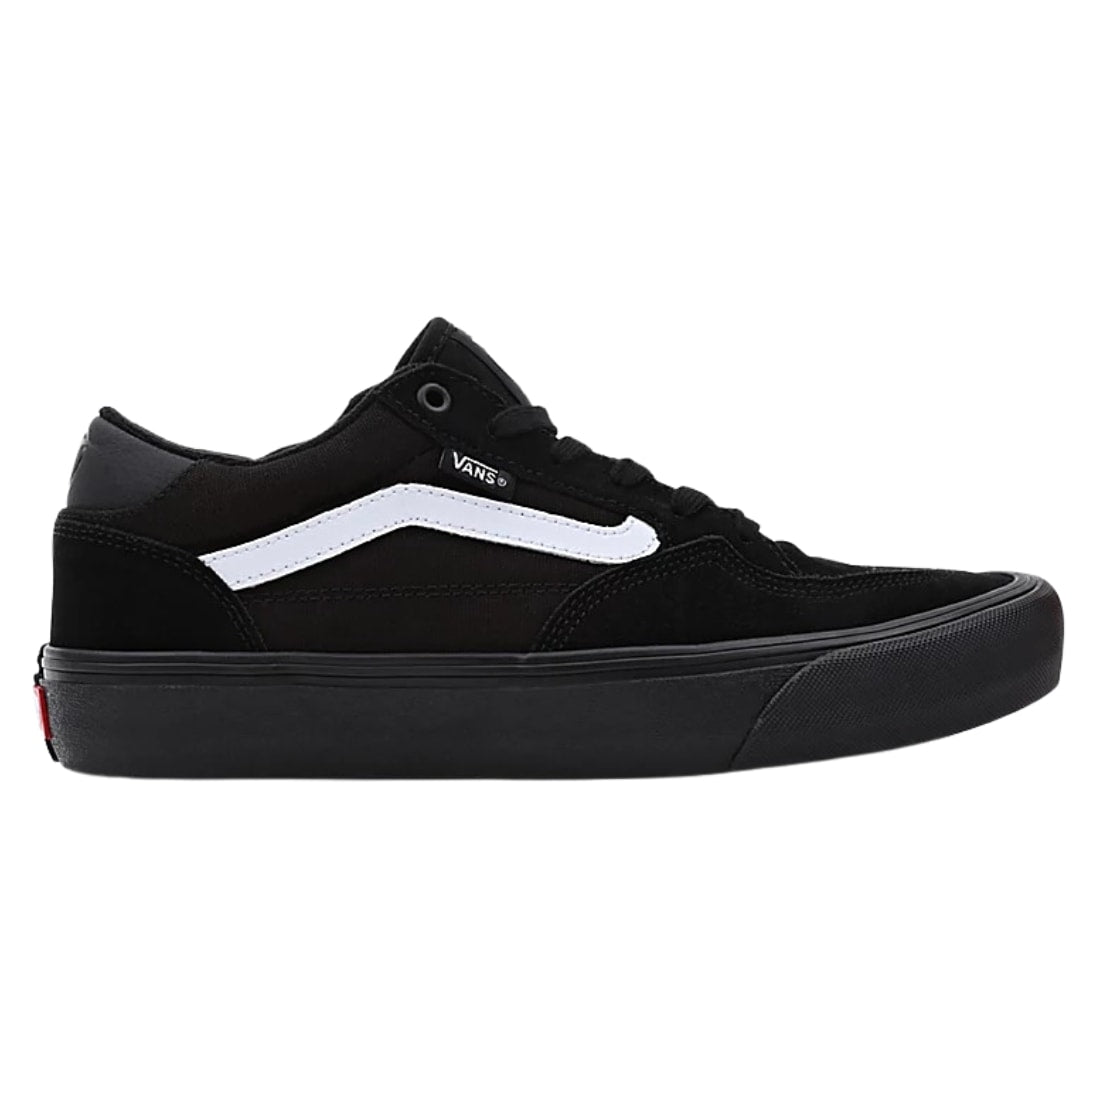 Vans Rowan Skate Shoes - Black/Black/White - Mens Skate Shoes by Vans